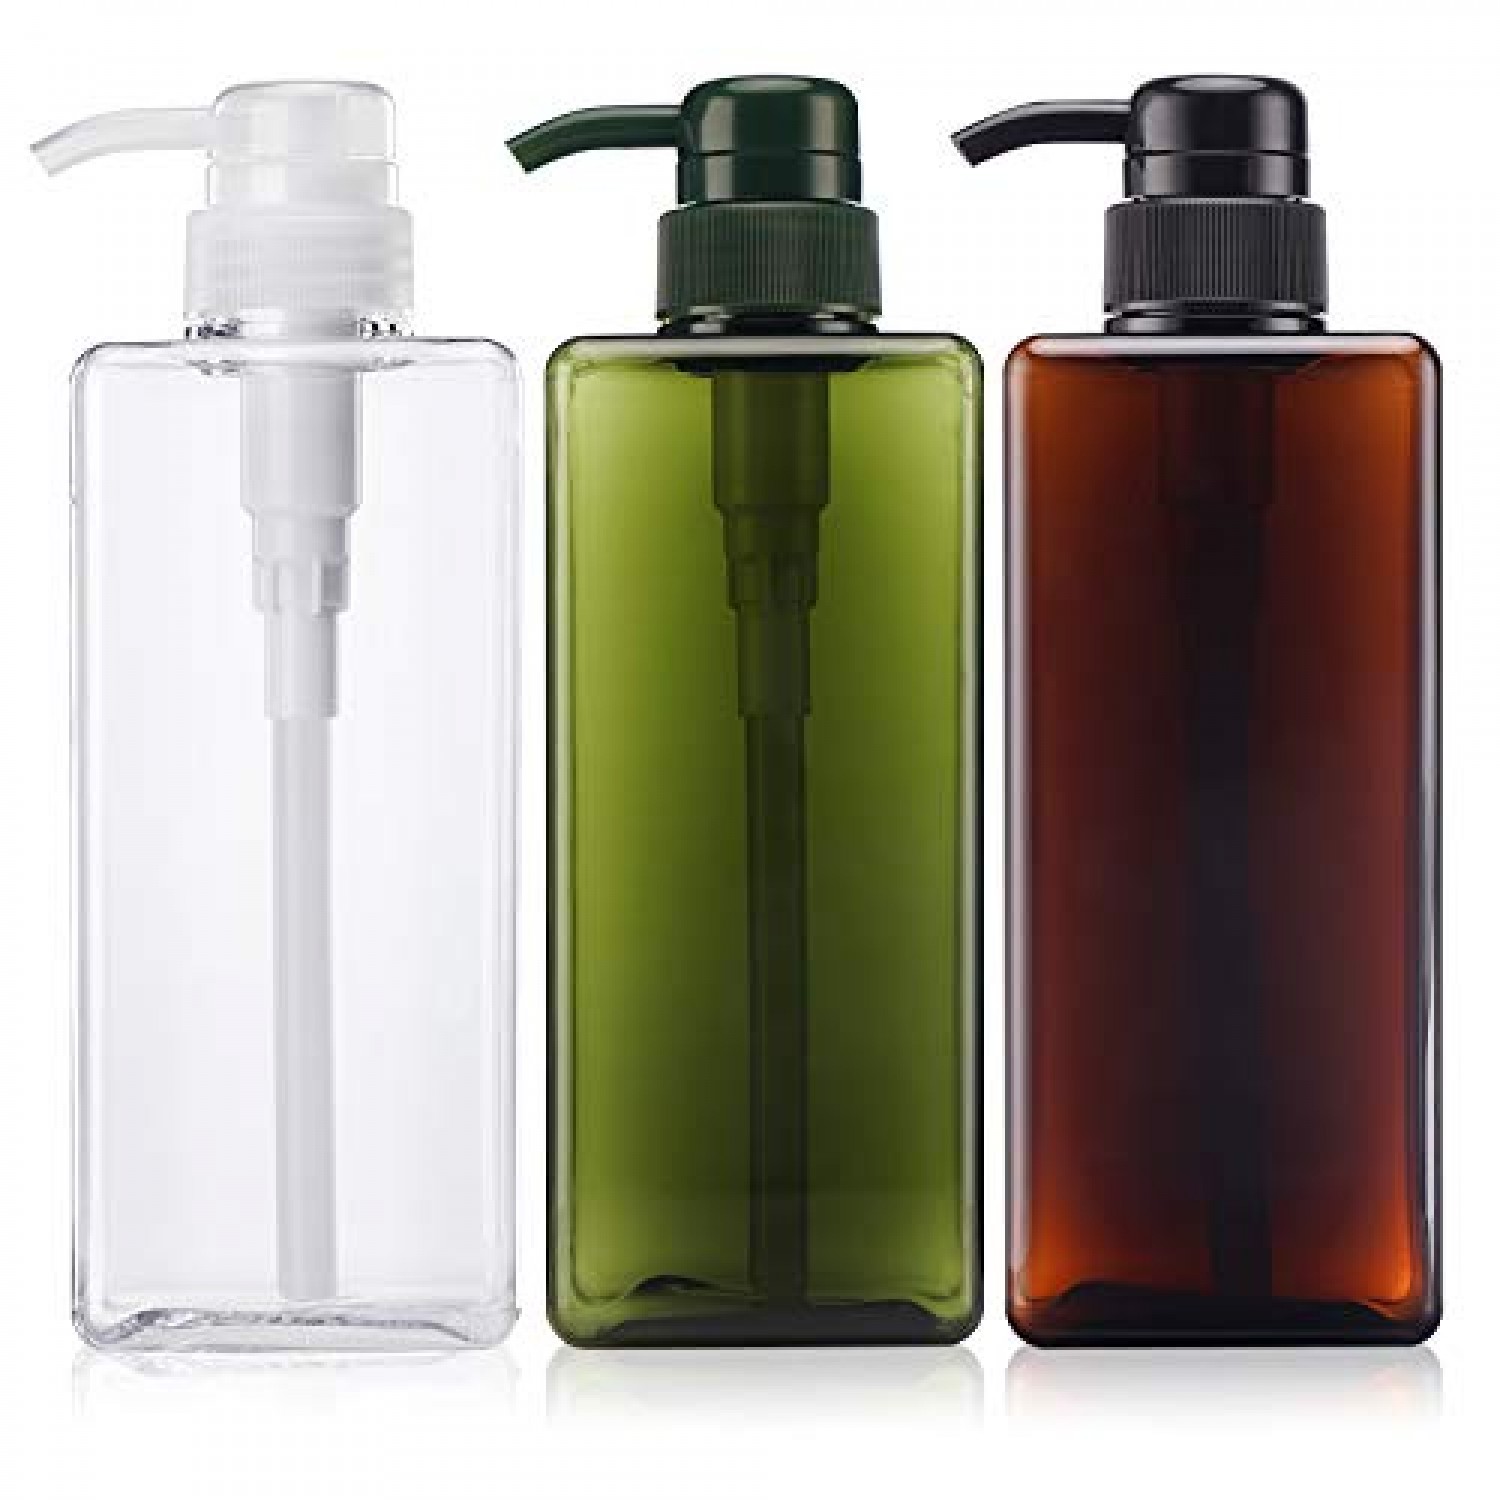 https://www.suream.life/image/cache/catalog/suream-amazon-2022-01-07/Hand-Pump-Containers-for-Shampoo-Suream-3-Pack-22oz650ml-Clear-Brown-Green-Plastic-Empty-Refillable--B08CR5PB8J-4532-1500x1500.jpeg